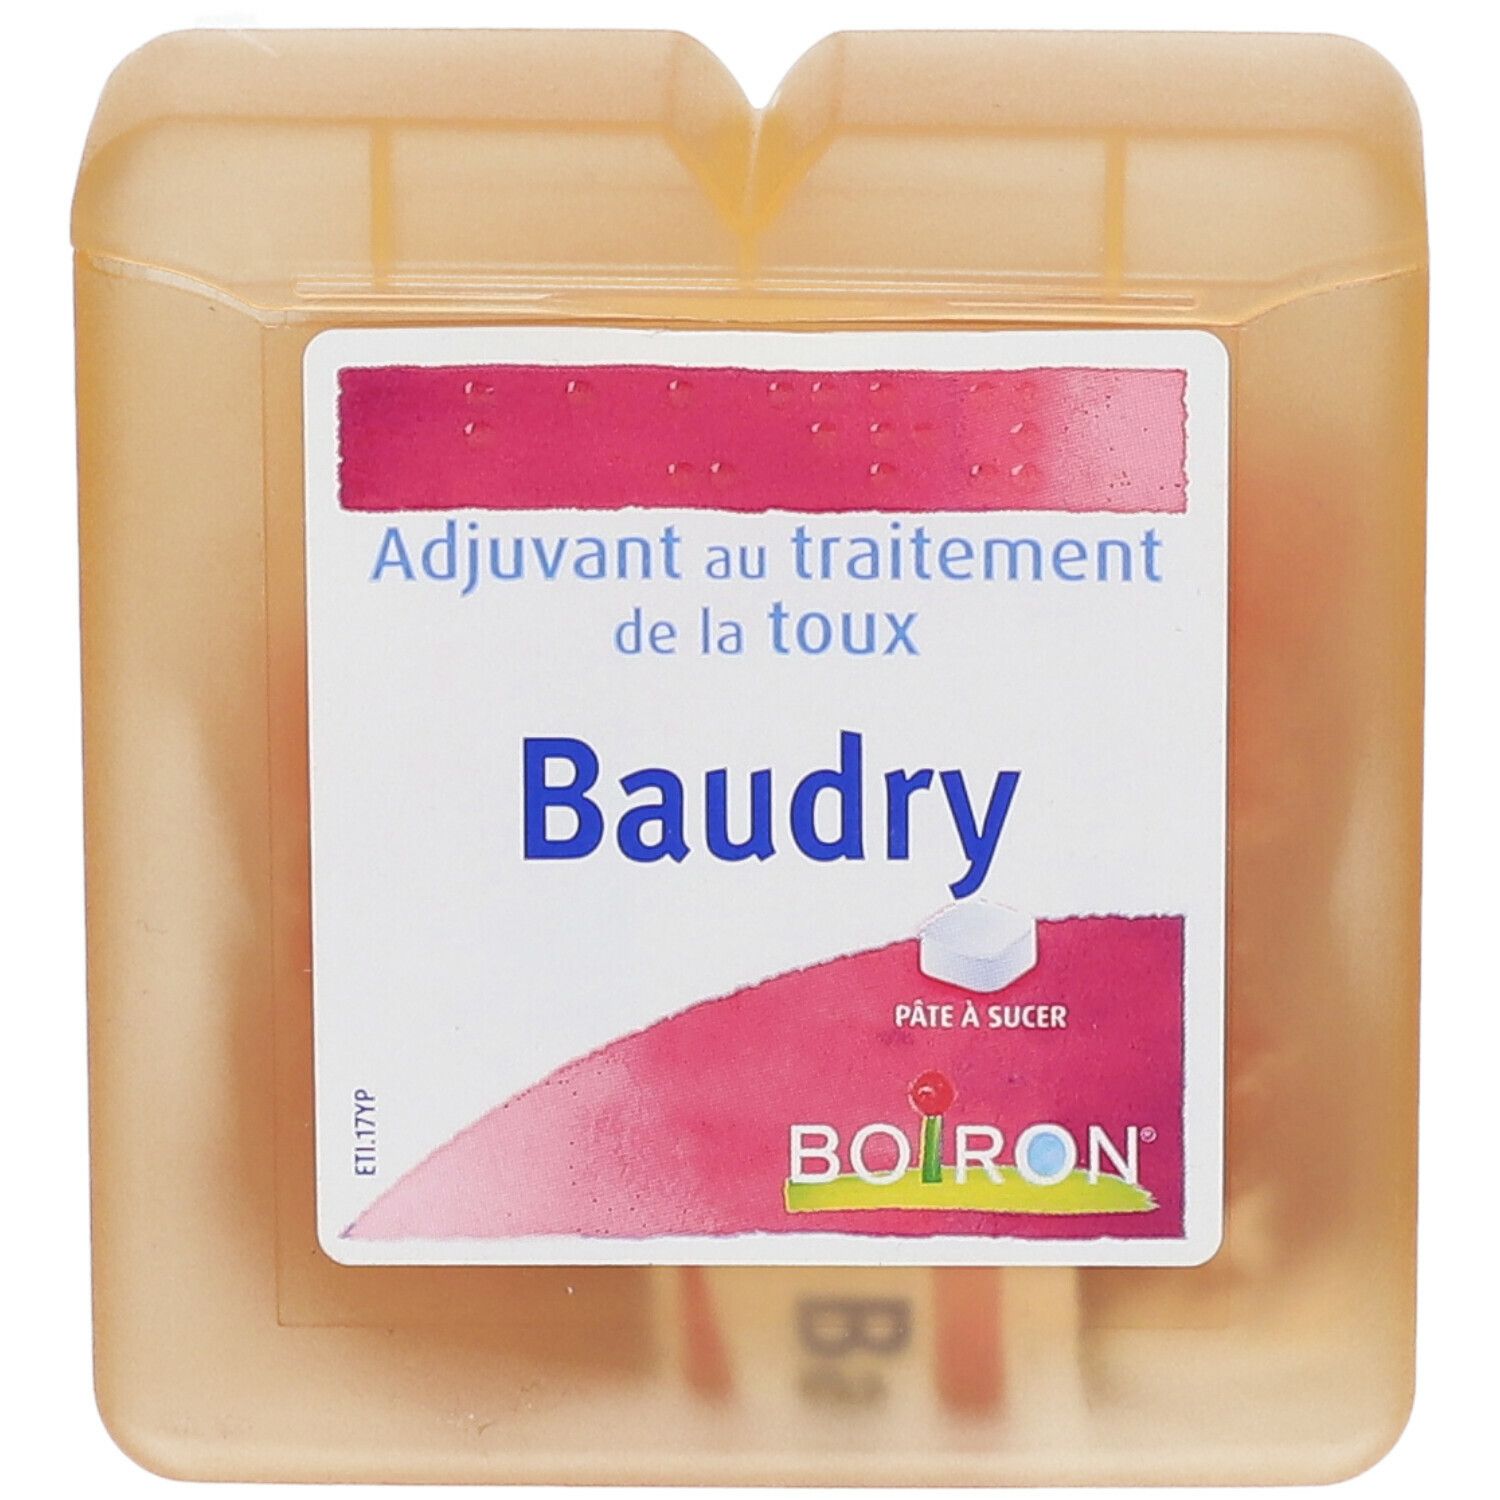 Boiron Baudry